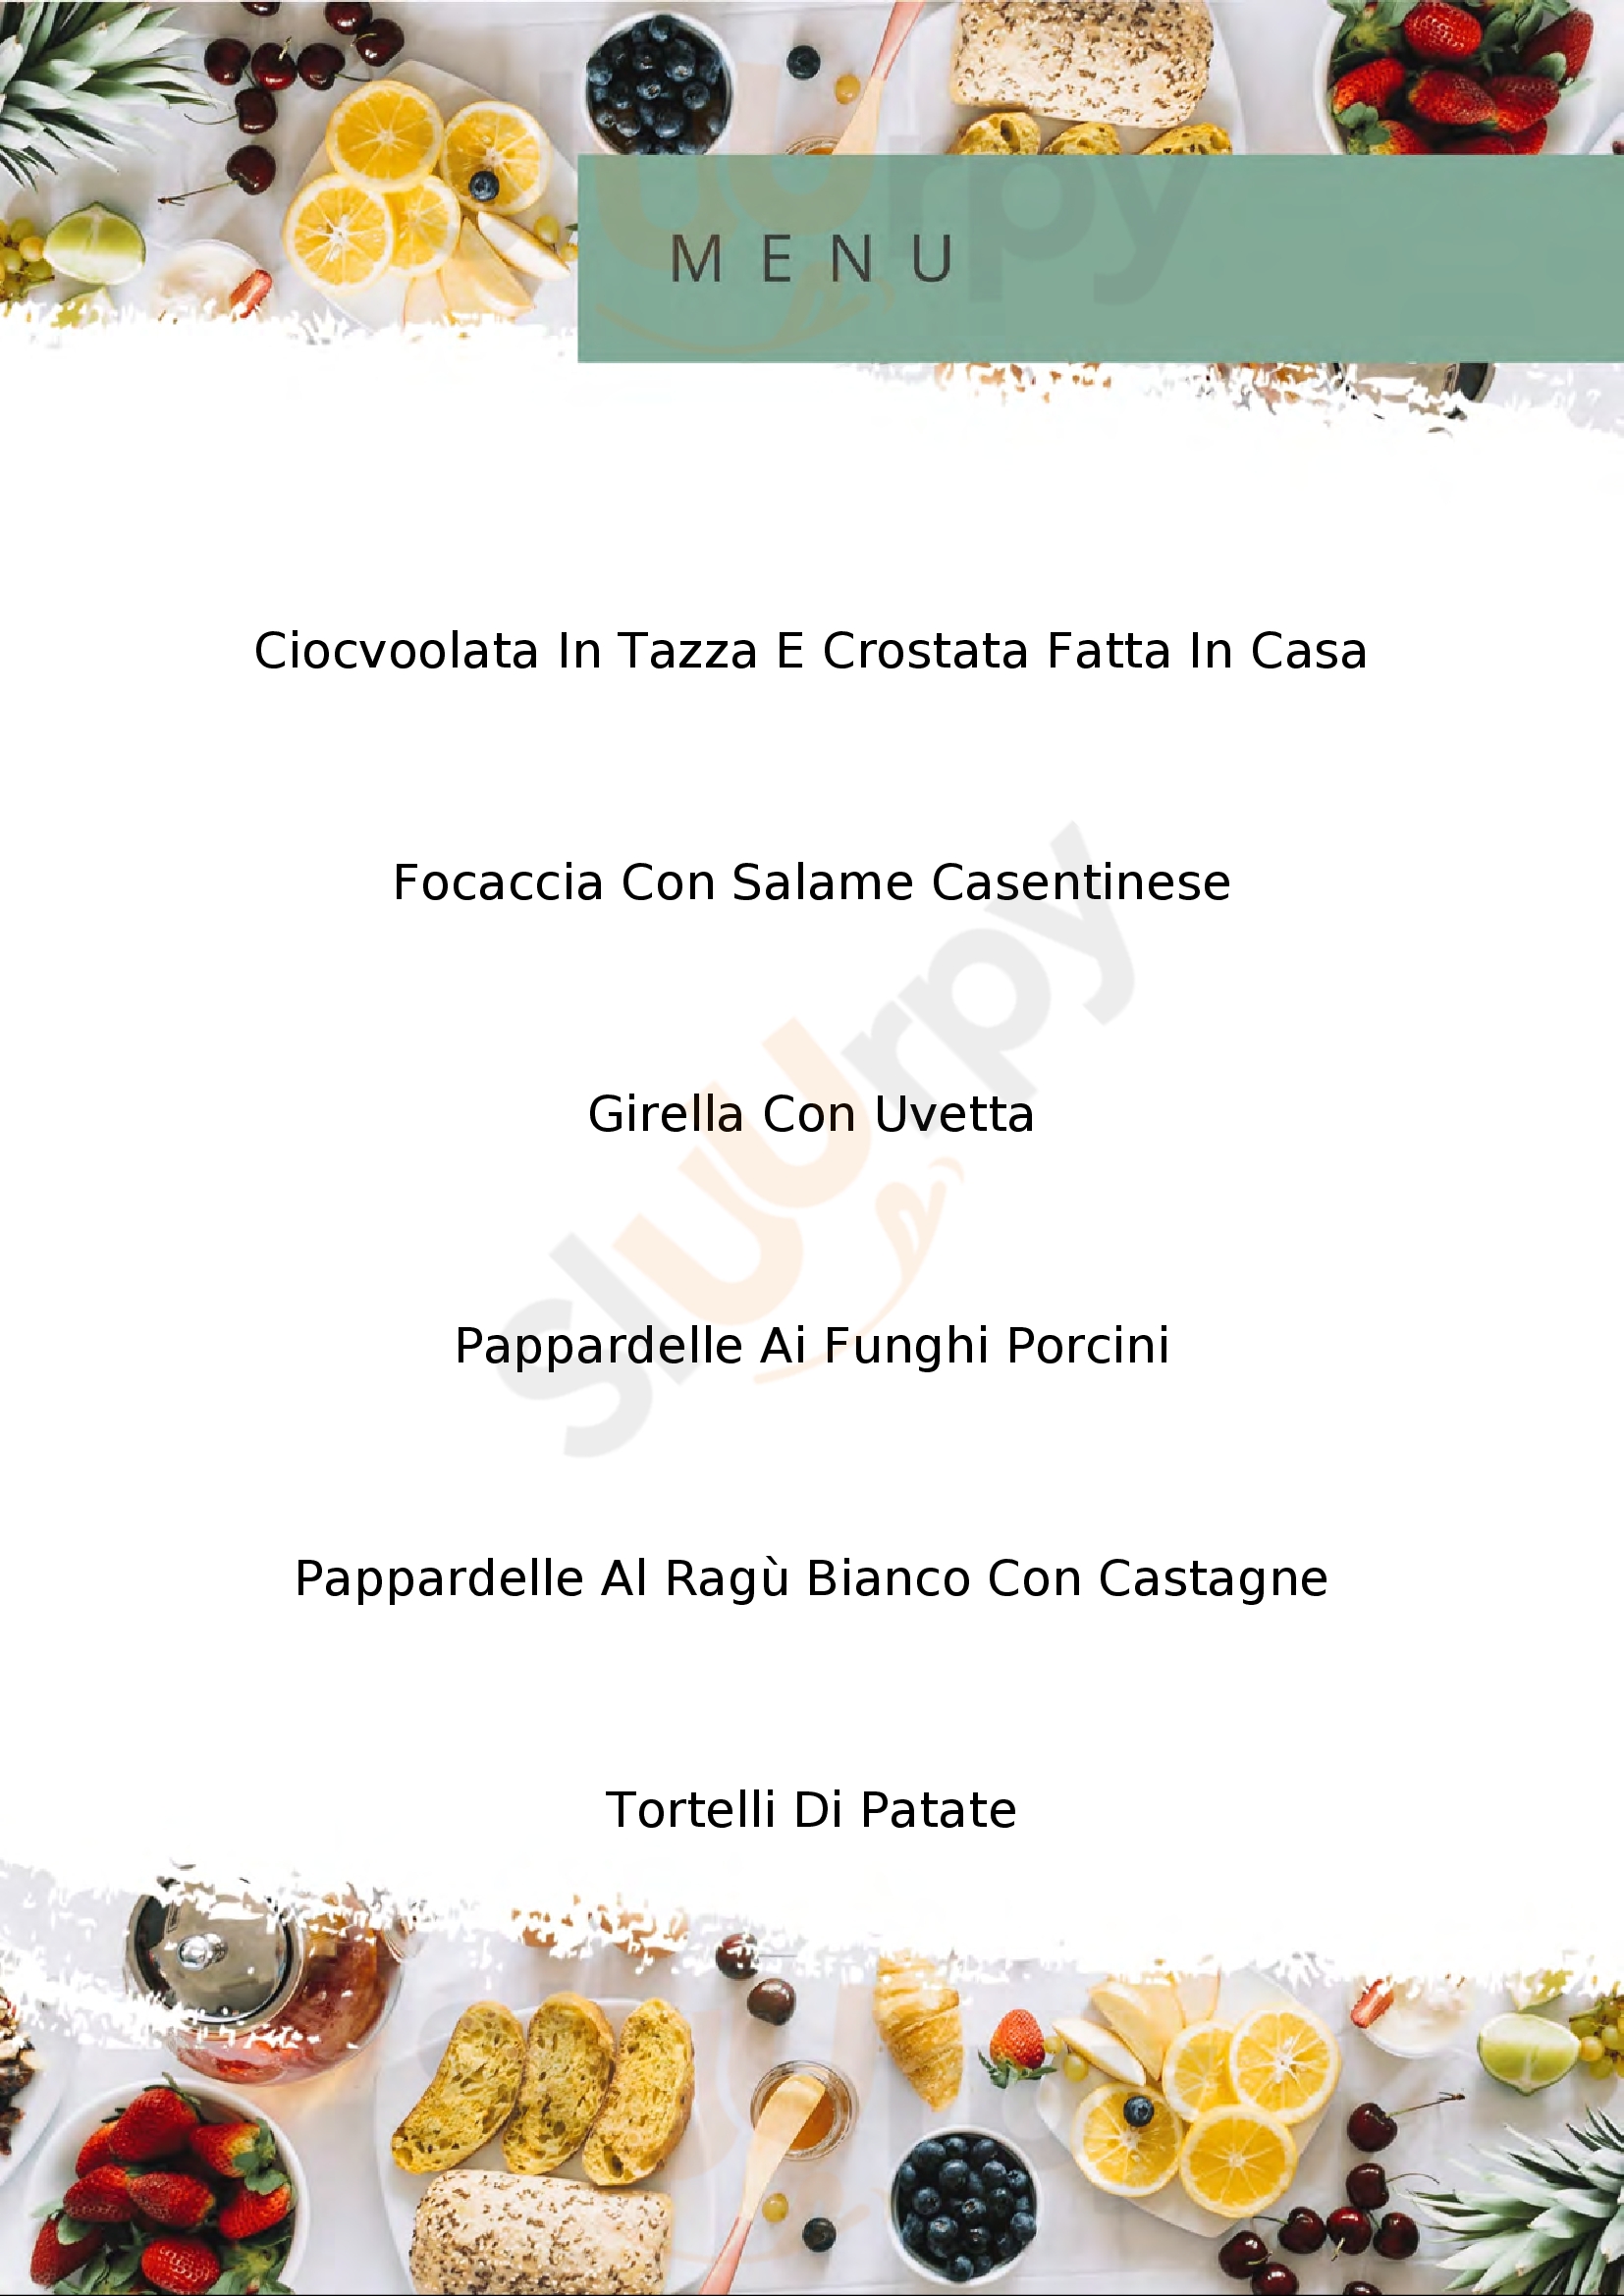 Belli's Cafe Badia Prataglia menù 1 pagina